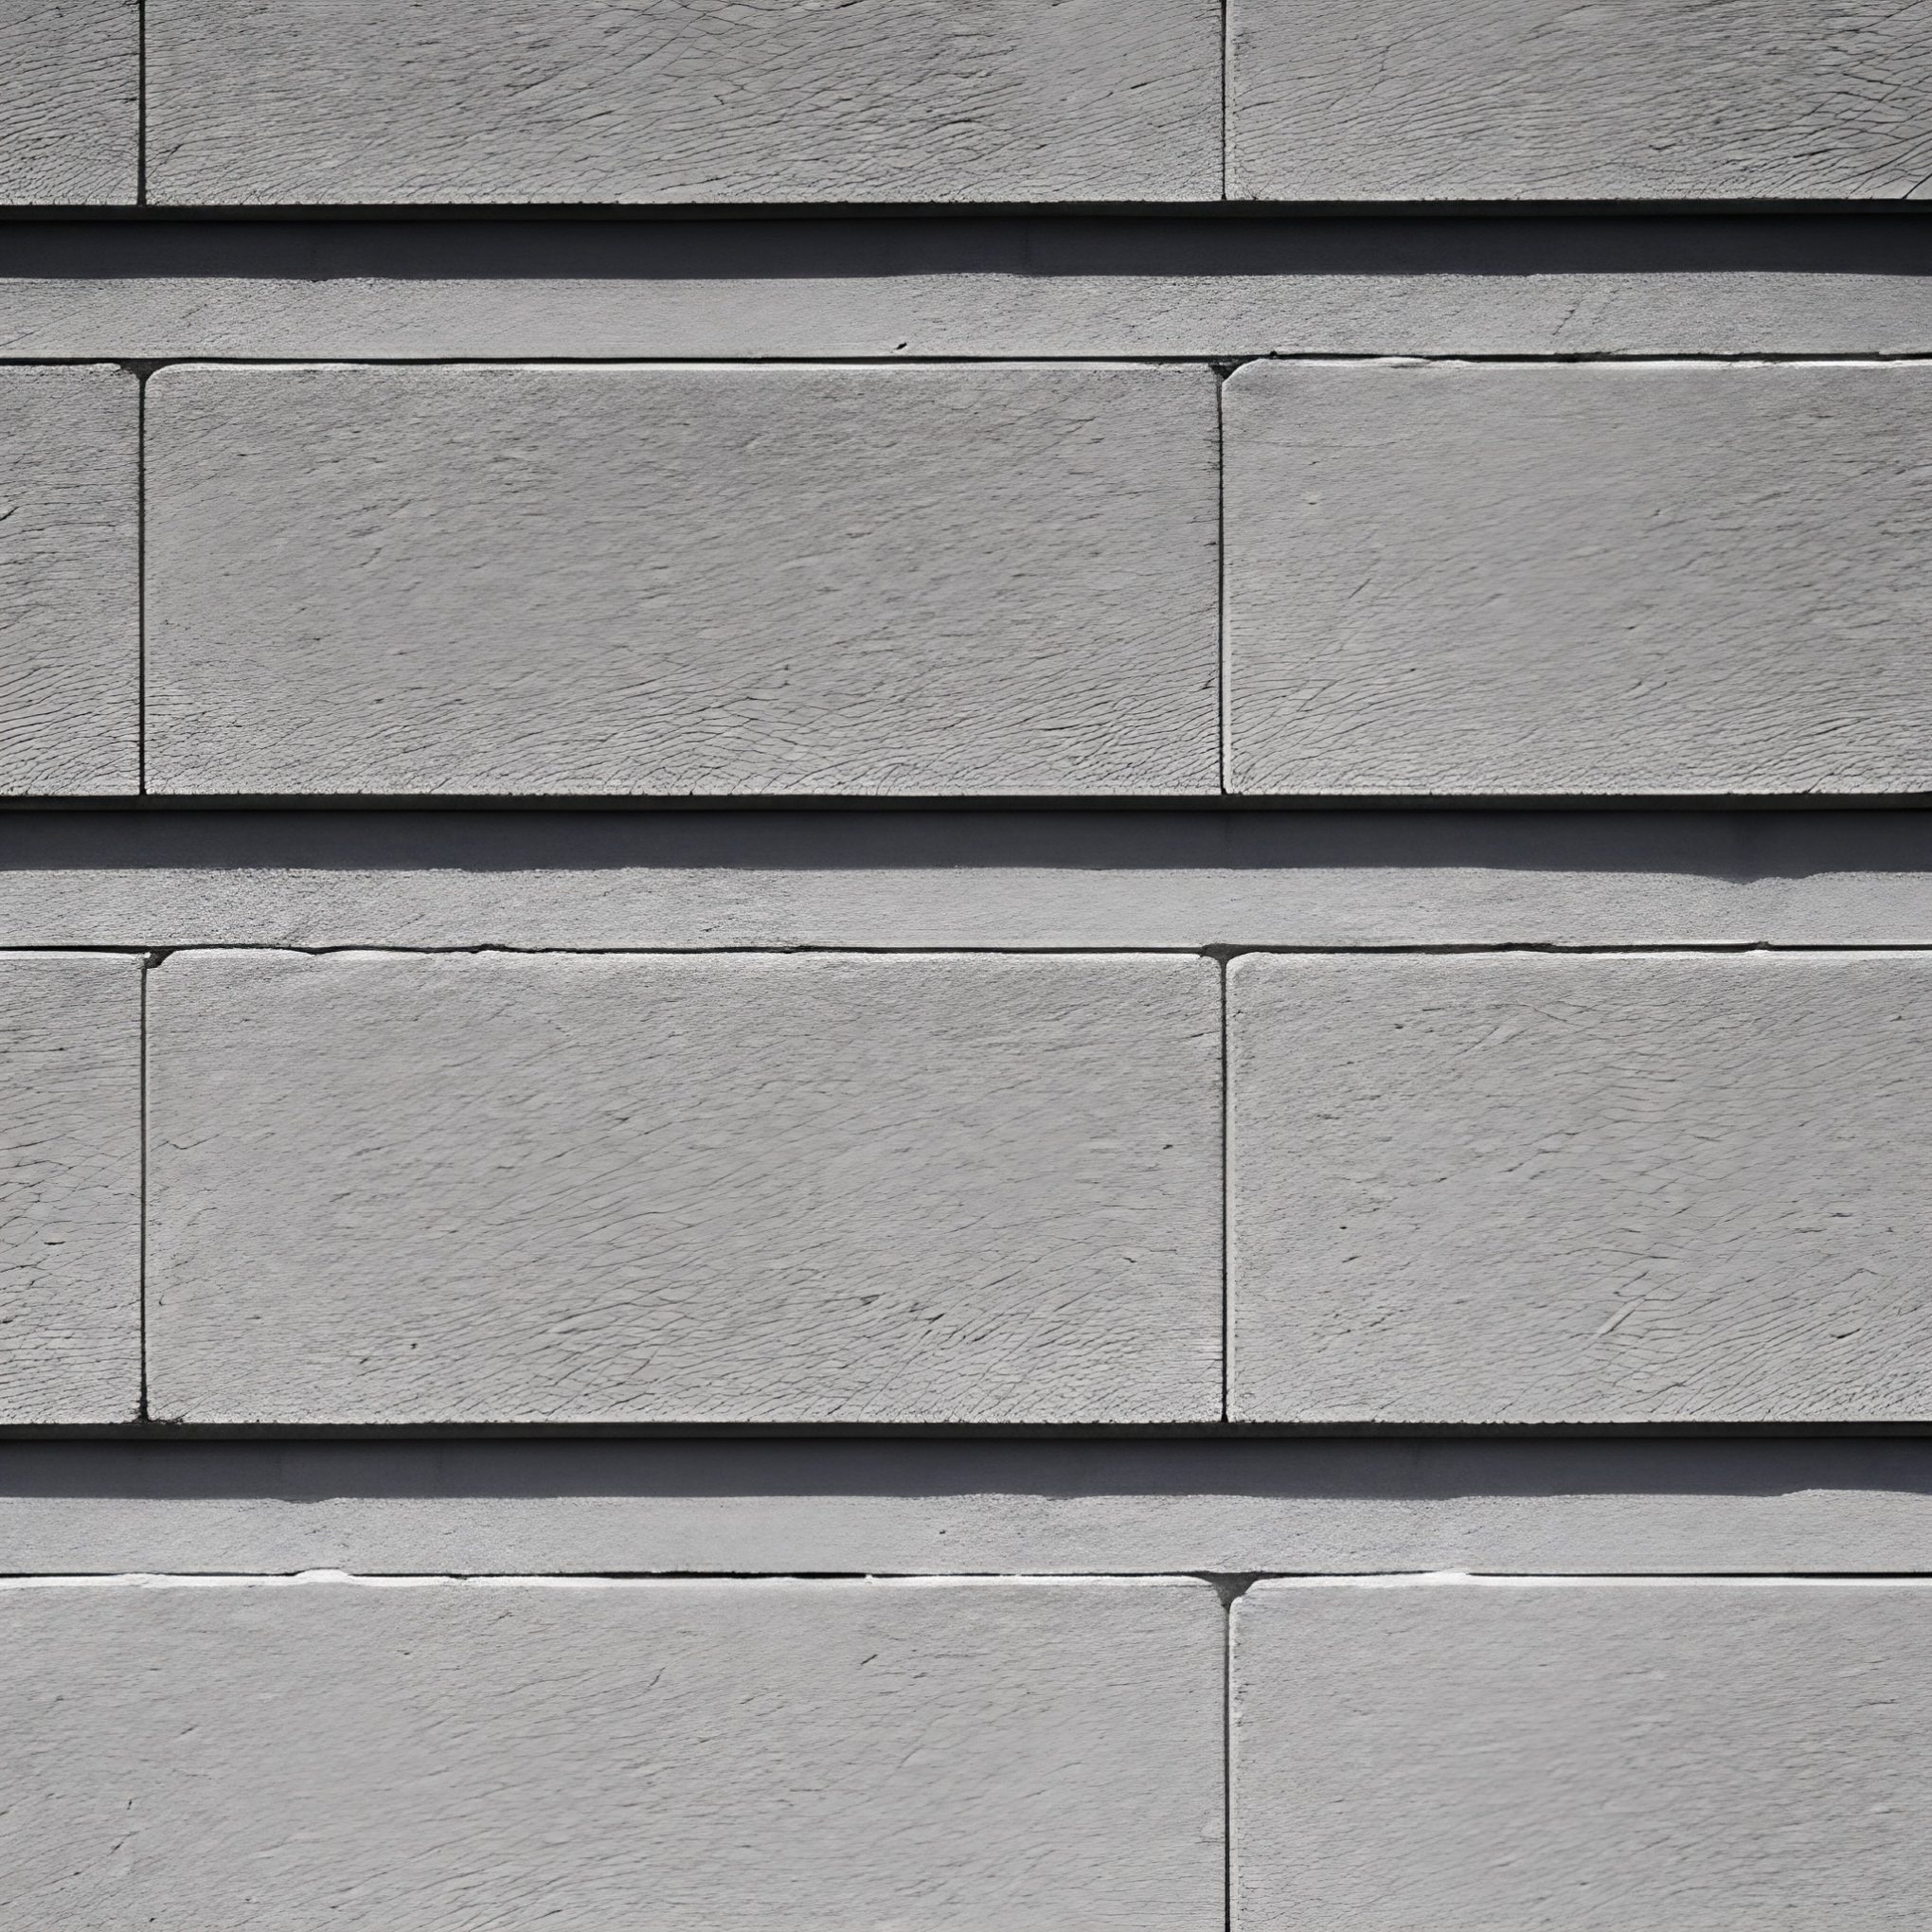 Grey Brick Wall Background Free Stock Image